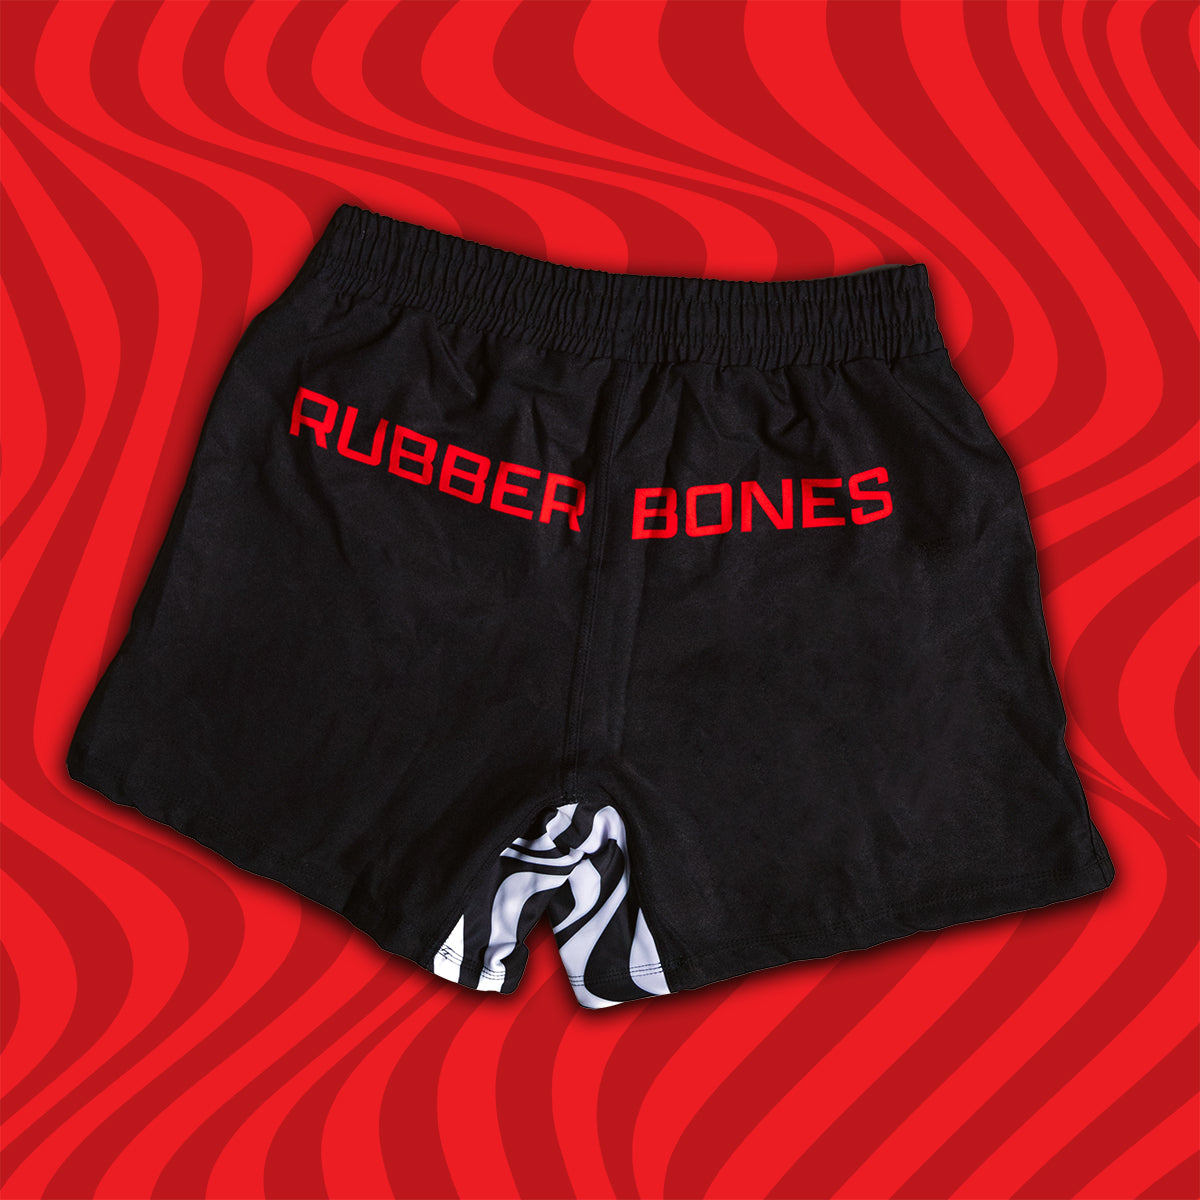 Skullwave Grappling Shorts – Rubber Bones Rash Guards